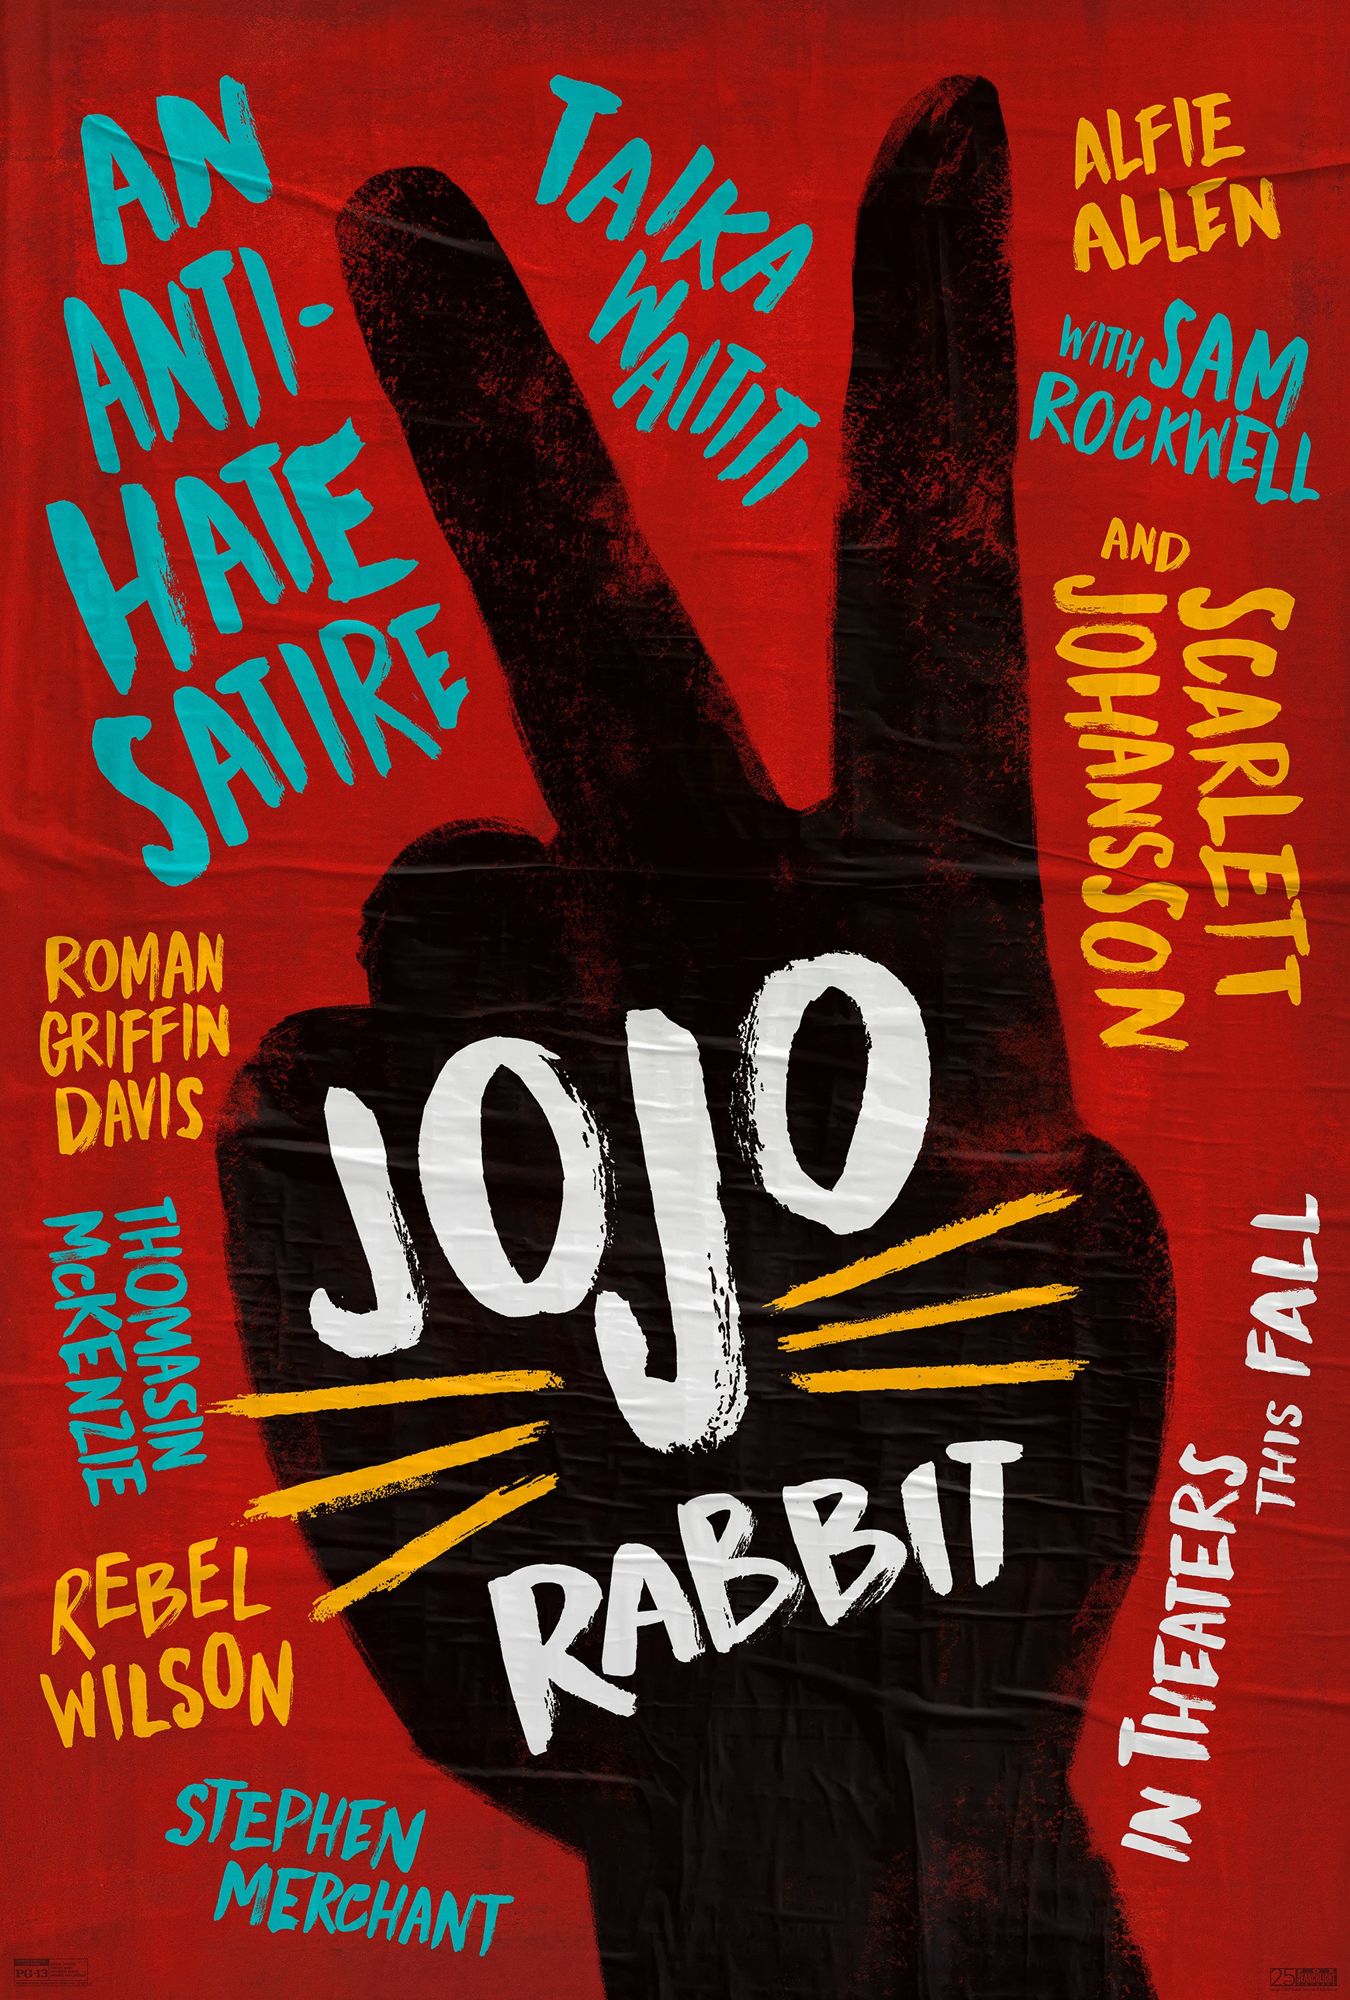 Jojo Rabbit (2019) Pictures, Photo, Image and Movie Stills1350 x 2000